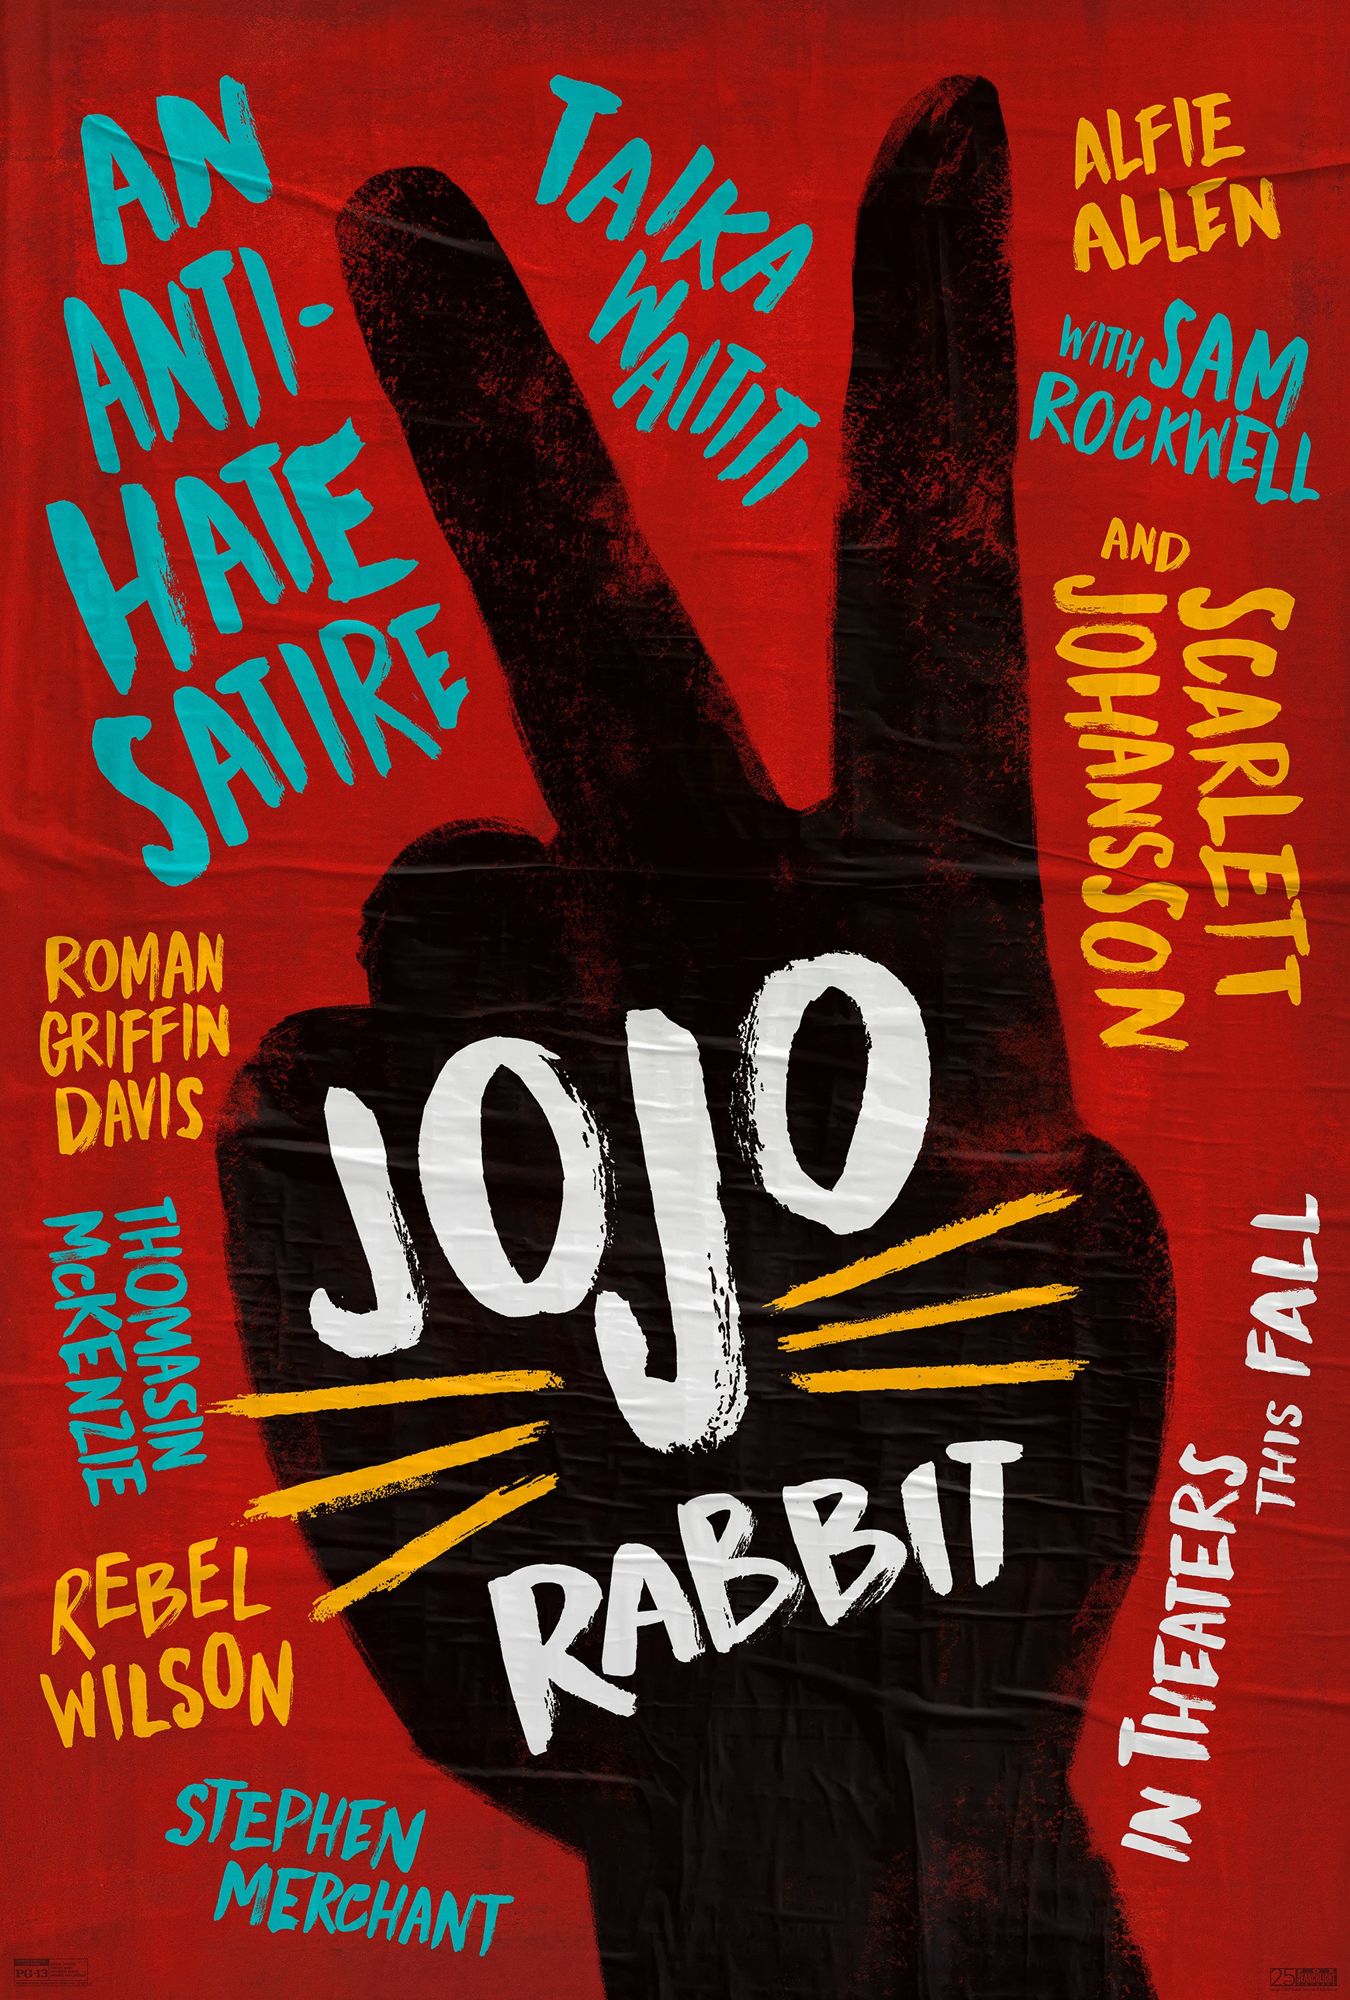 Jojo Rabbit (2019) Pictures, Photo, Image and Movie Stills1350 x 2000